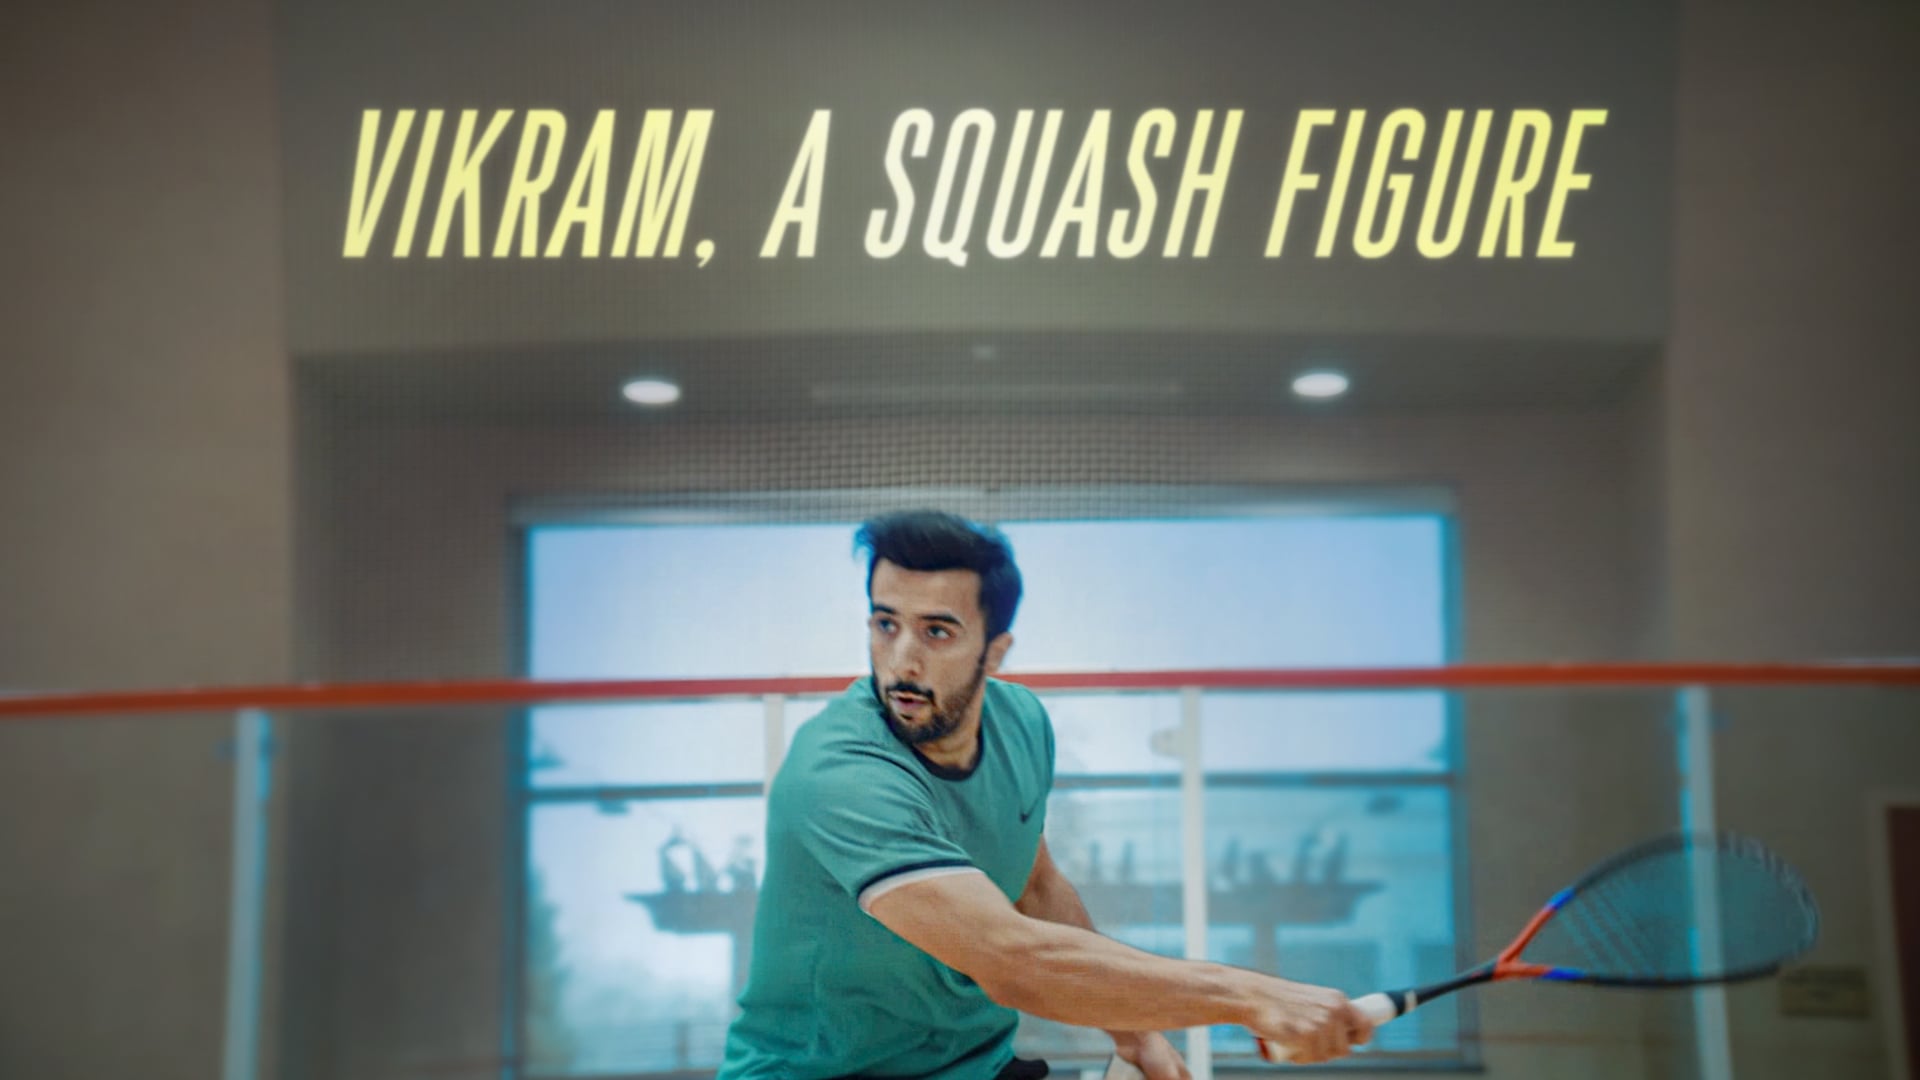 Vikram, A Squash Figure